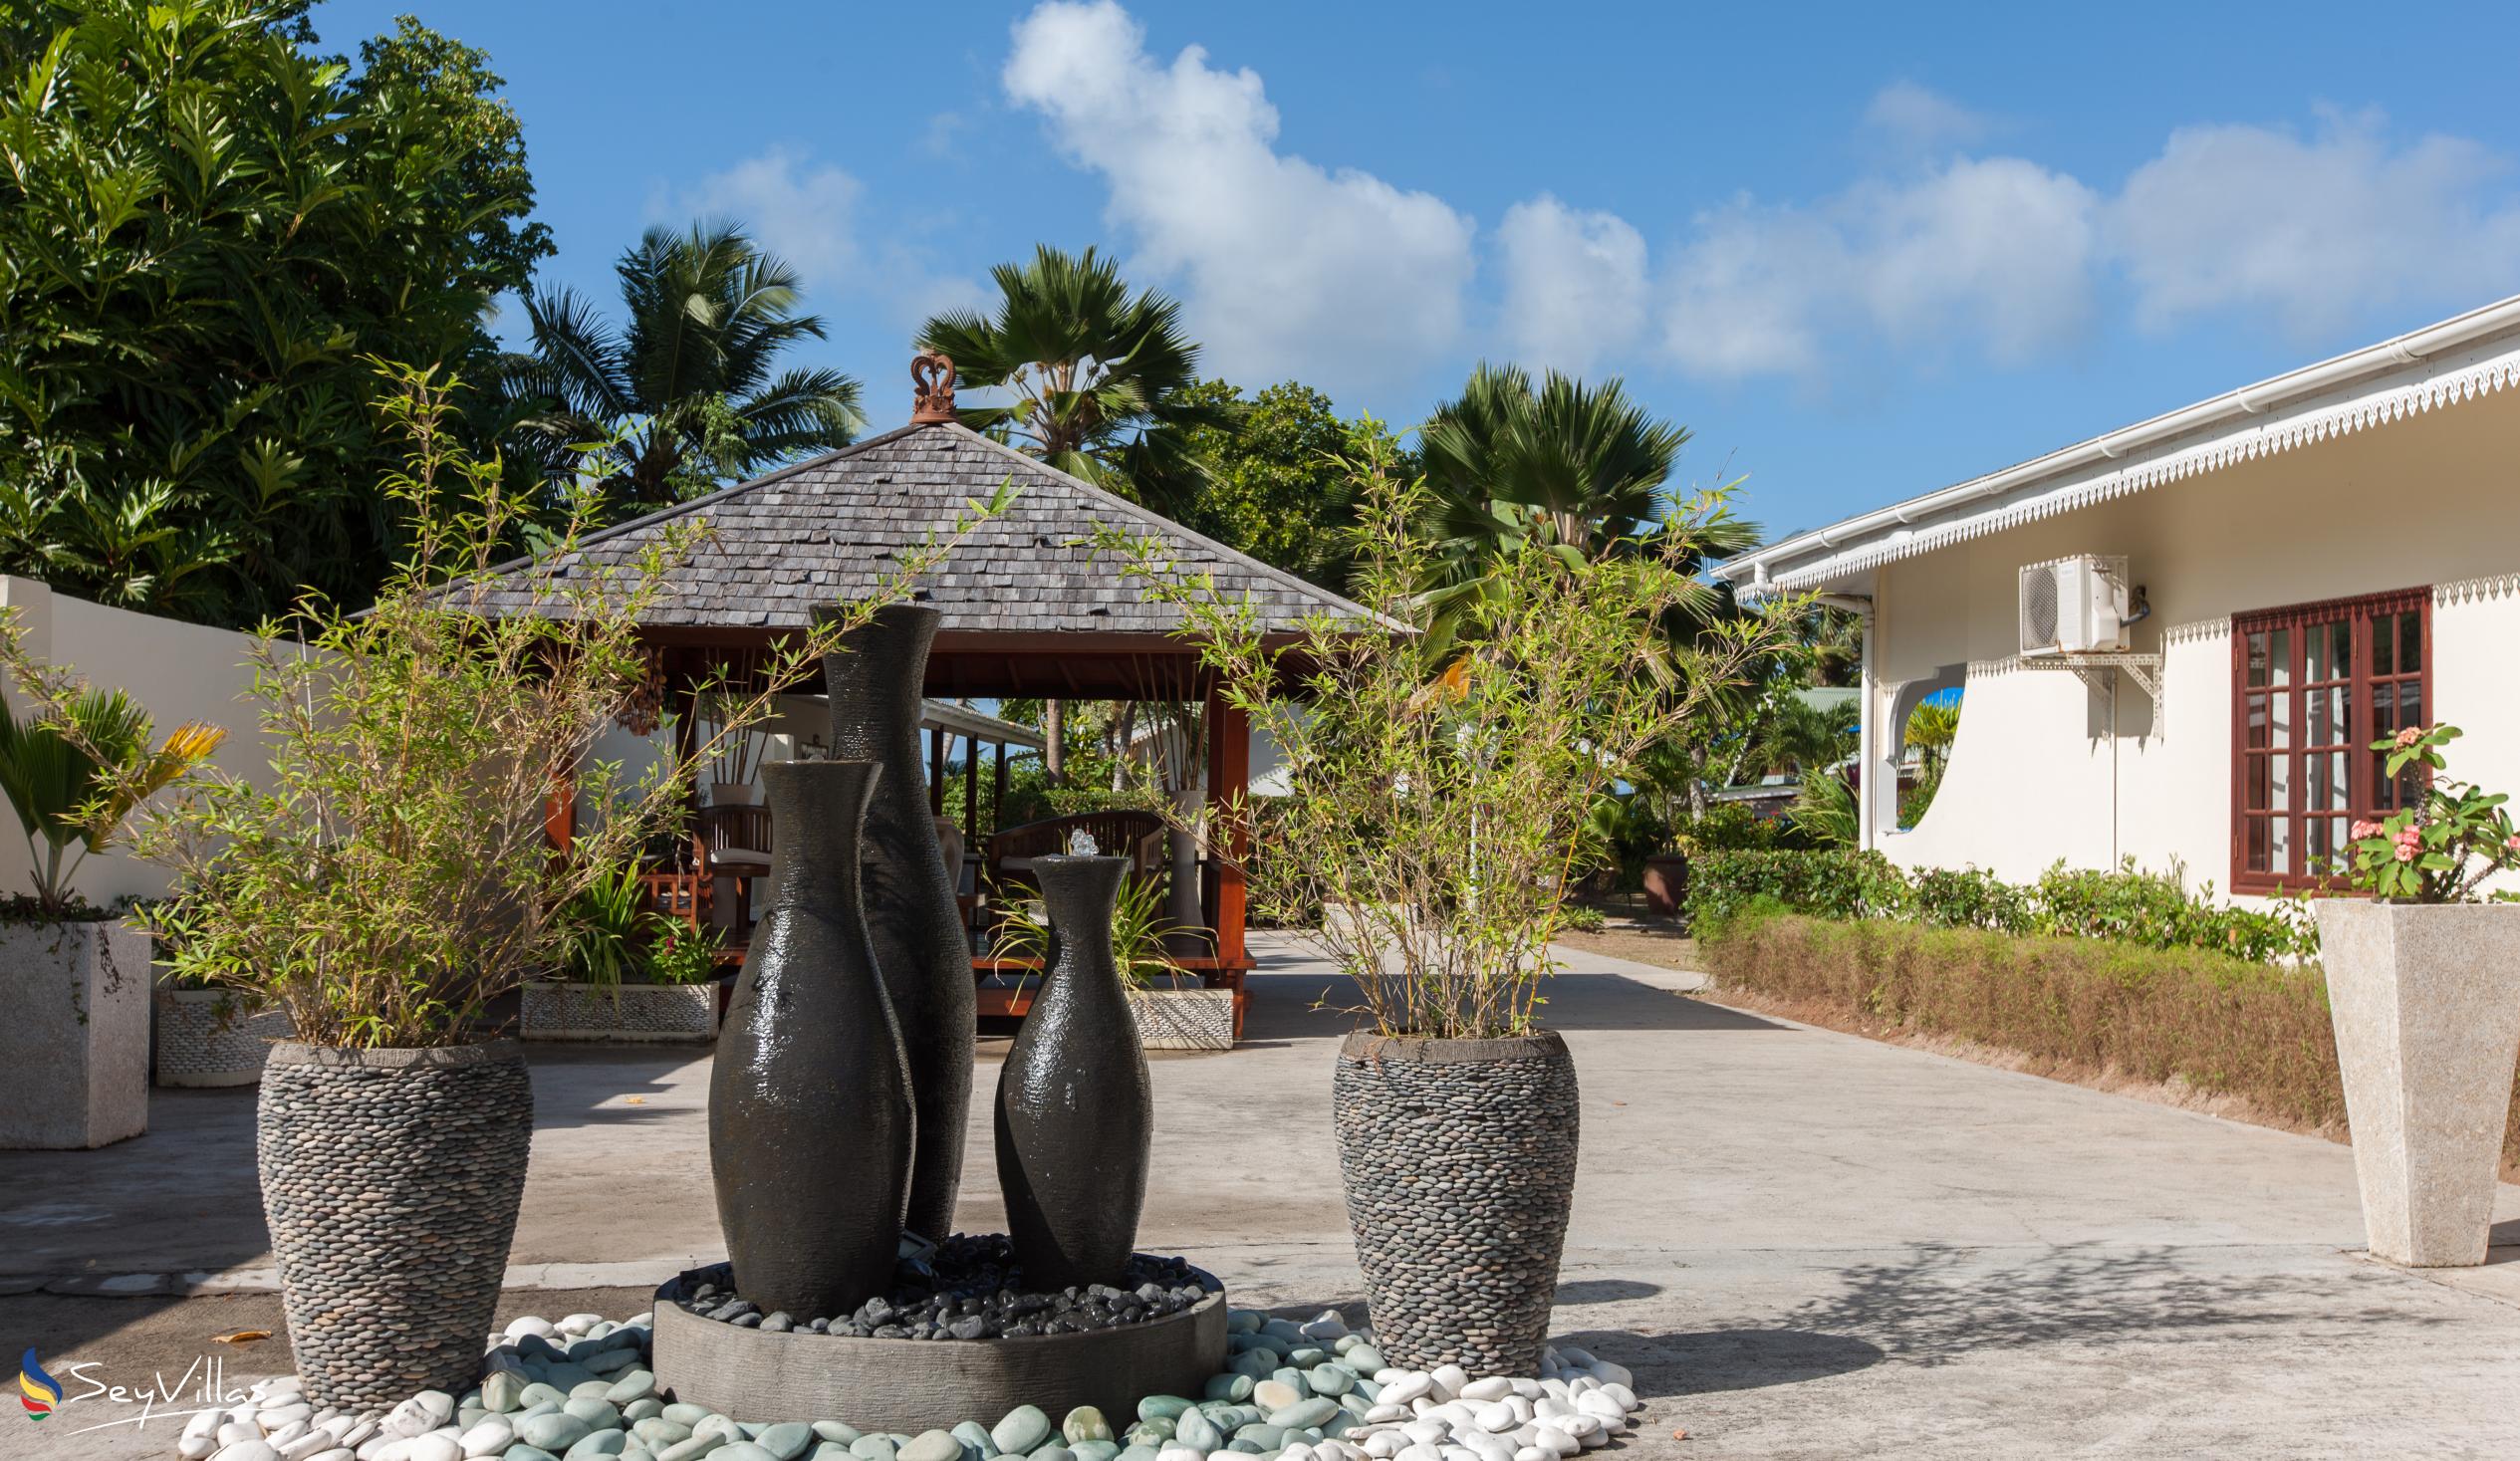 Foto 13: Villas de Mer - Aussenbereich - Praslin (Seychellen)